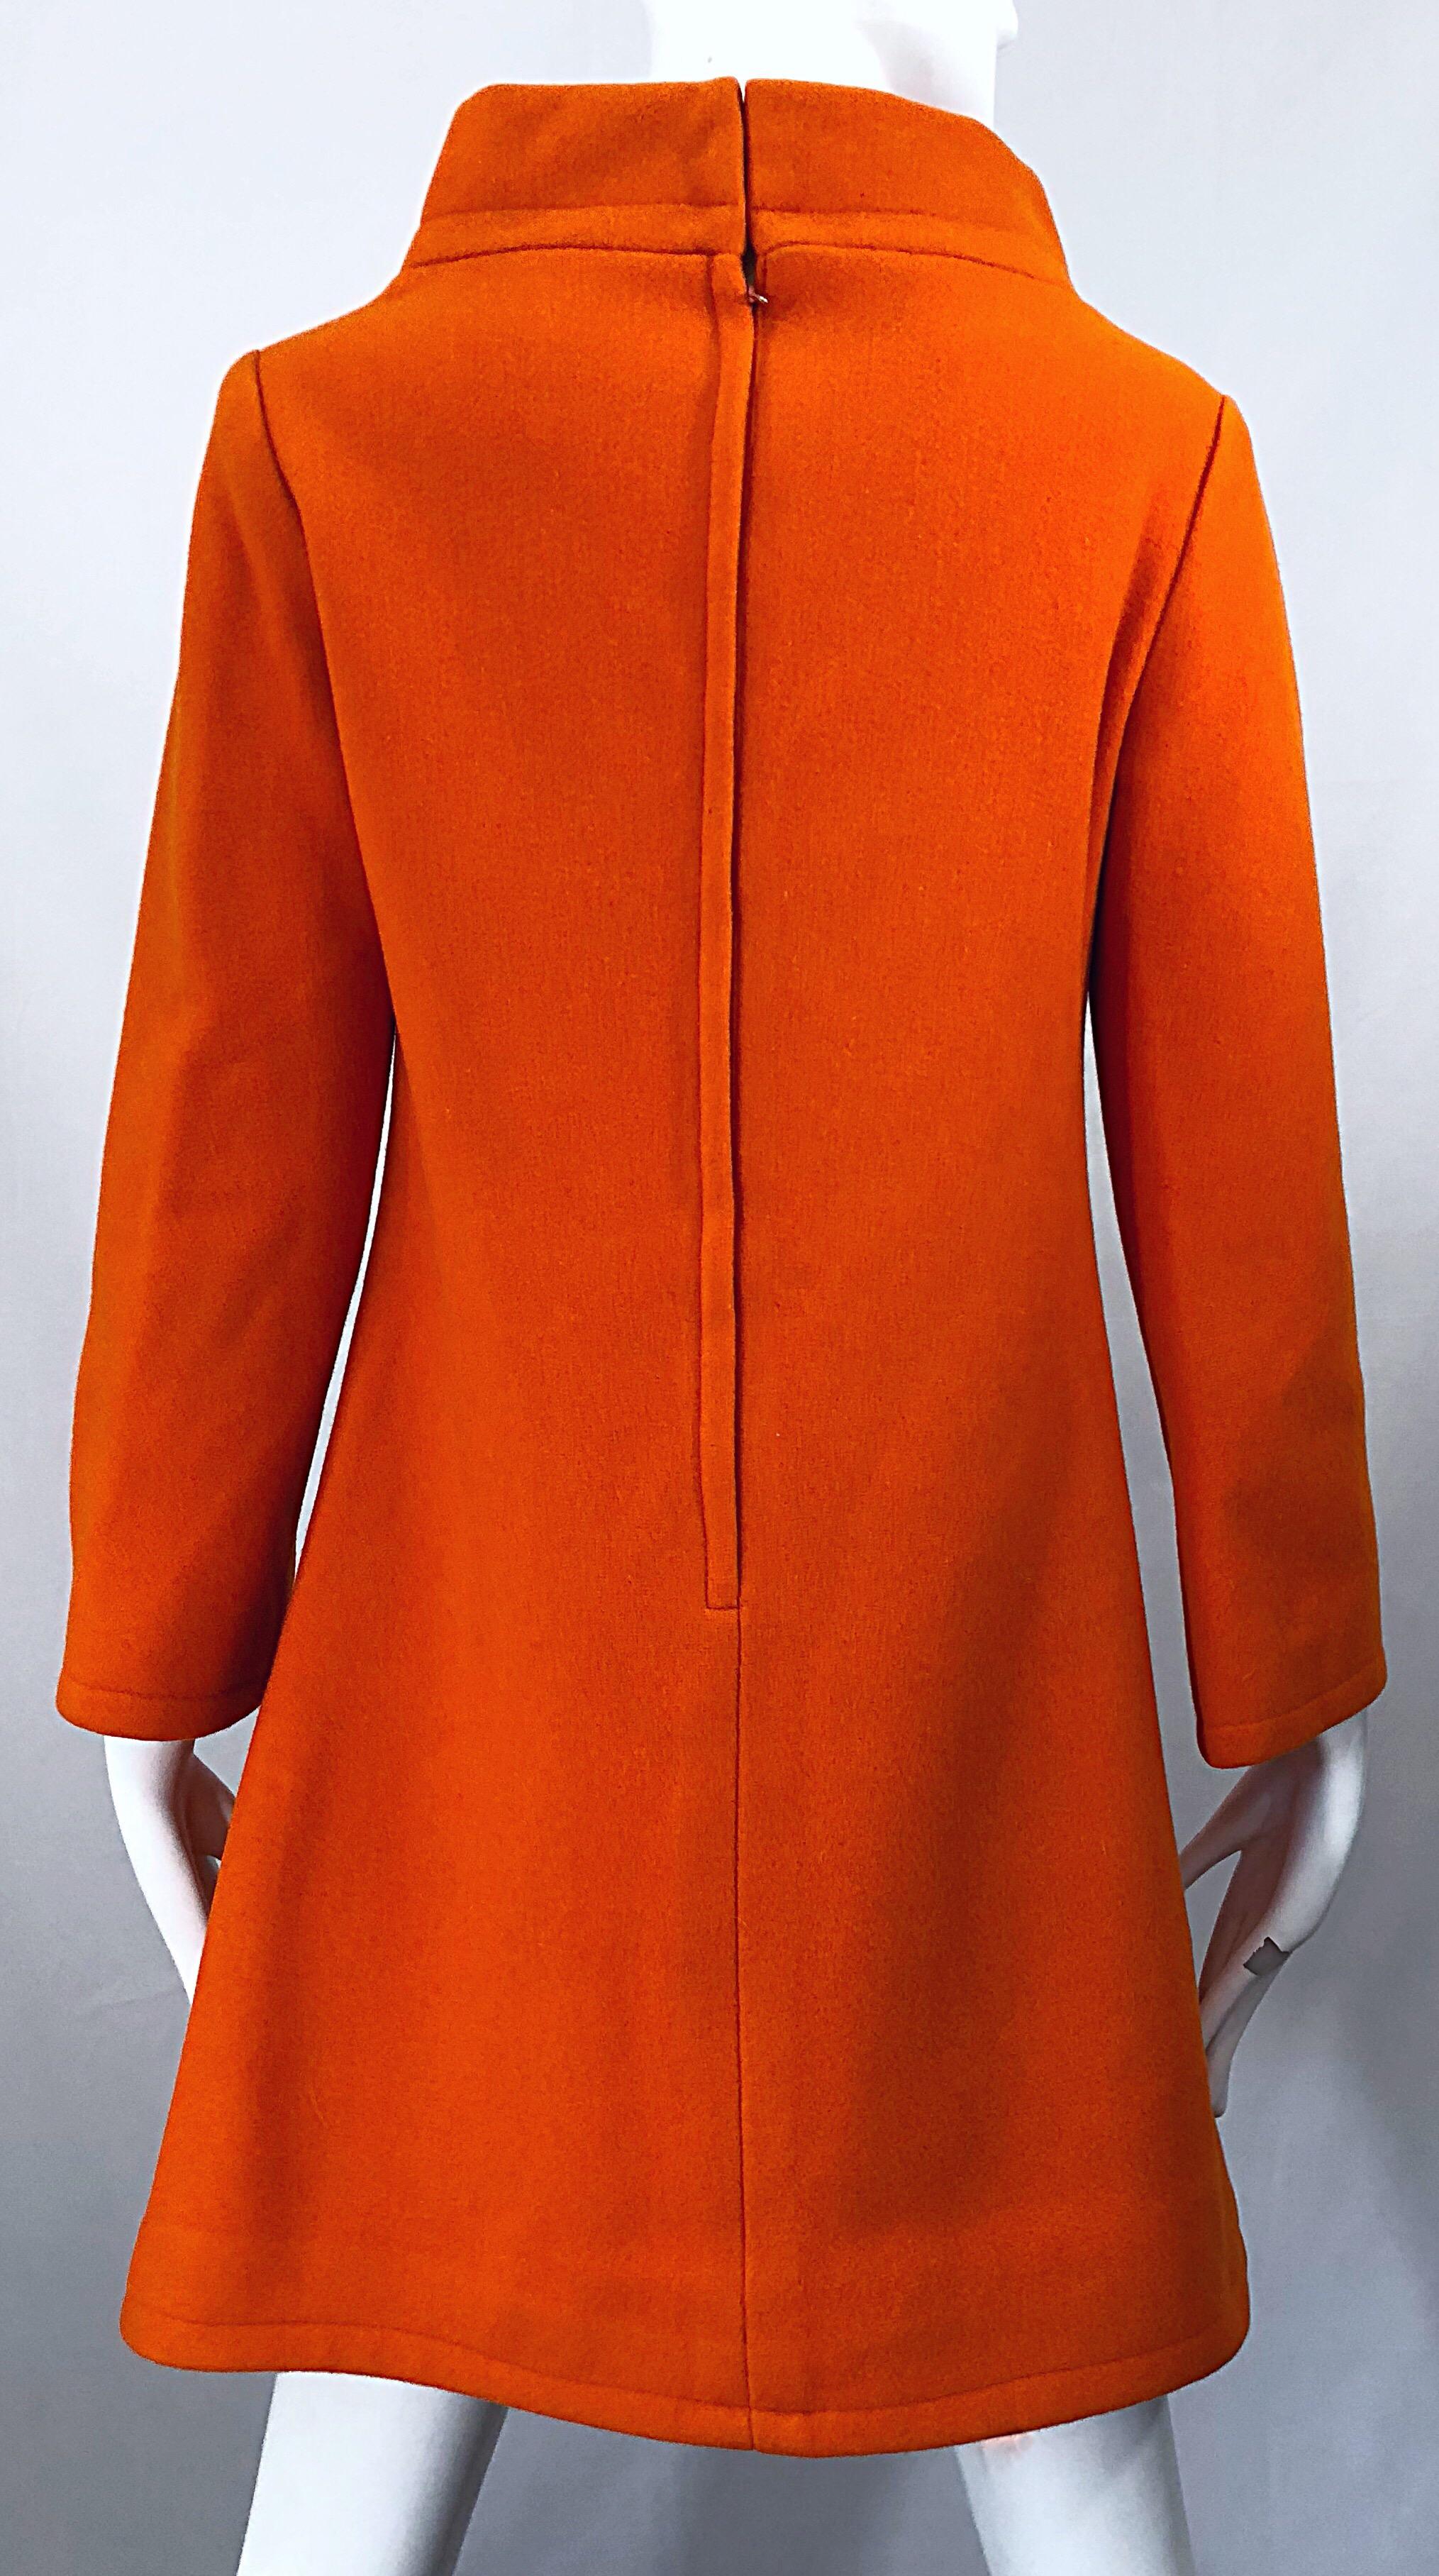 Chic 1960s Orange Wool Mod Space Age Cut Out A Line Vintage 60s Mini Dress Tunic 1